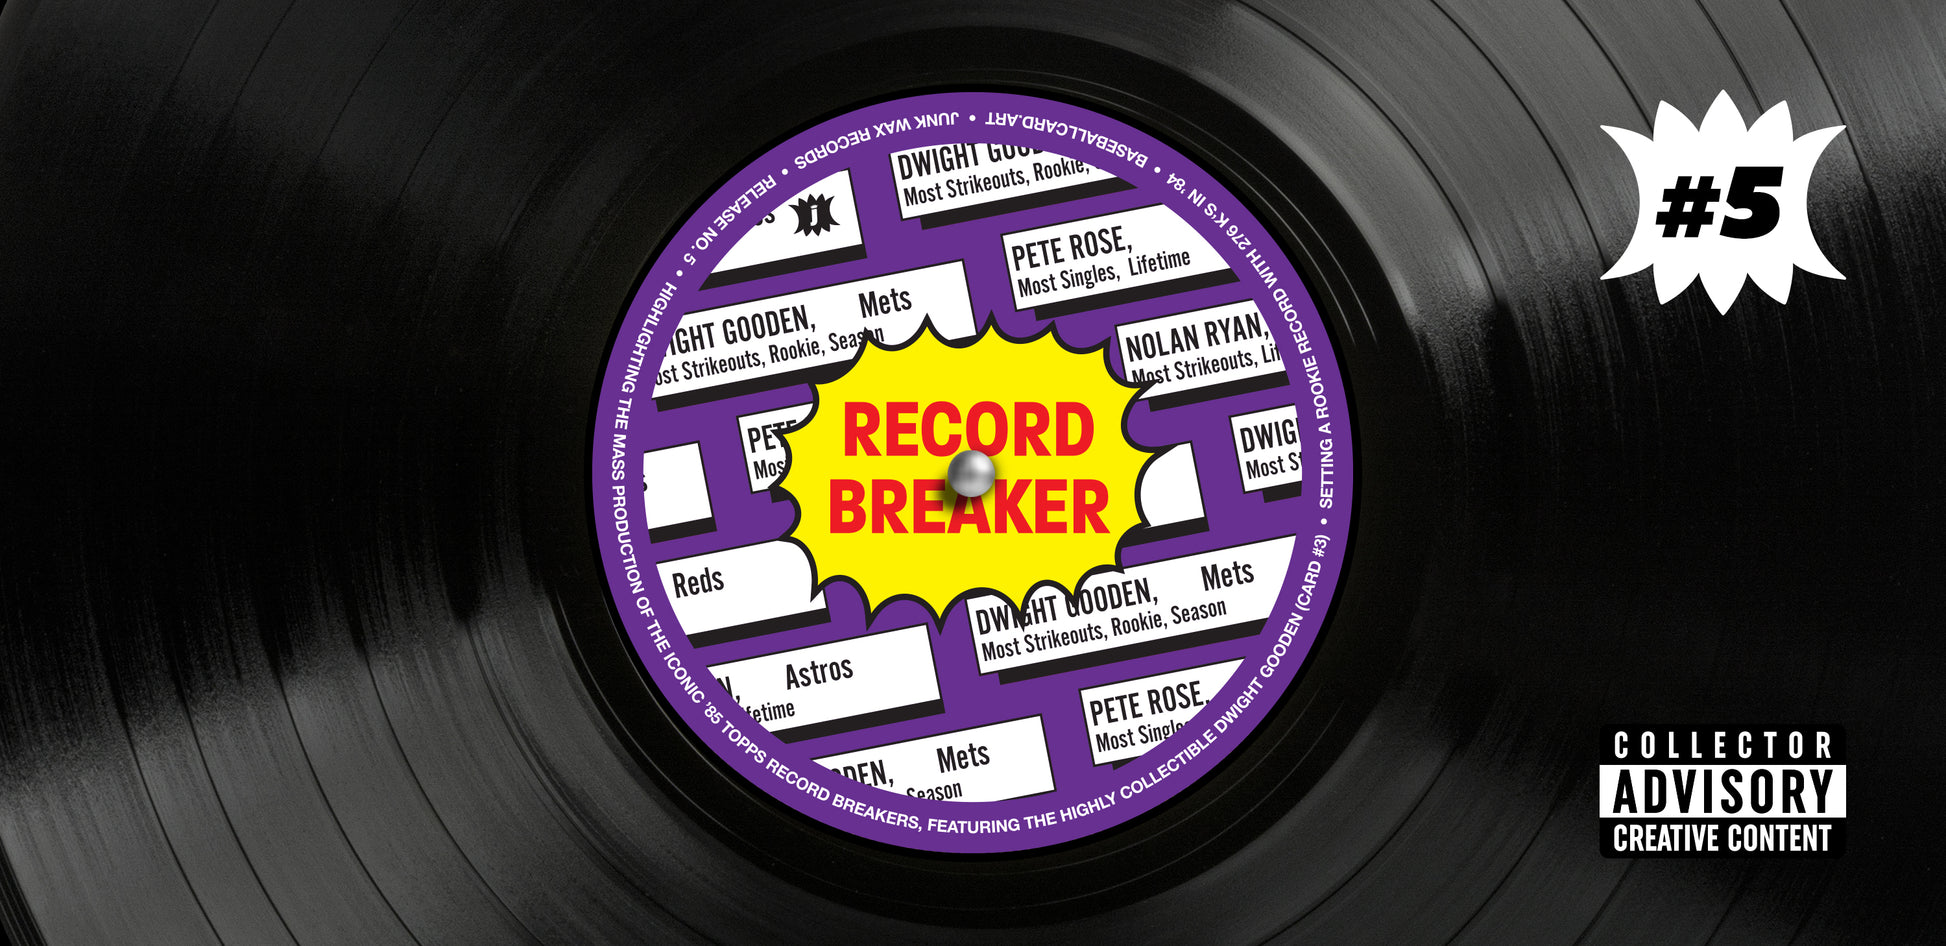 Junk Wax Records by Matthew Lee Rosen: 1985 Topps Record Breakers